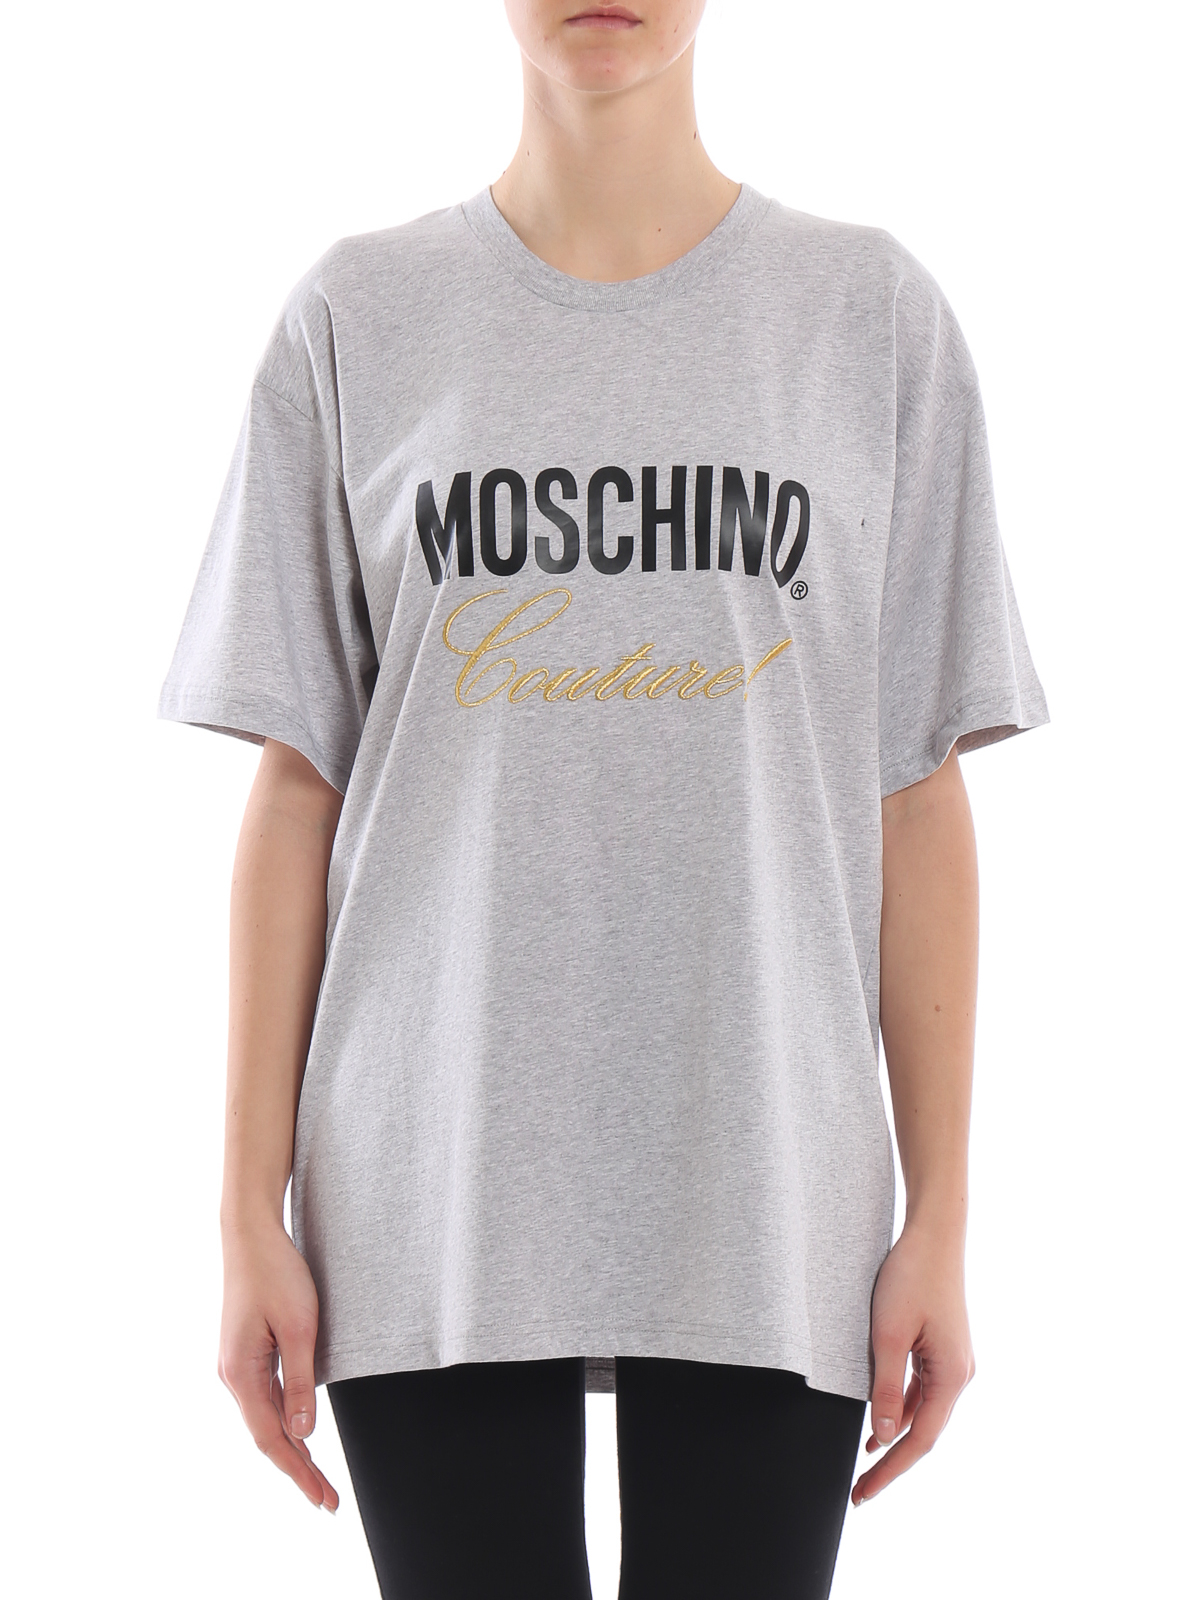 moschino grey t shirt